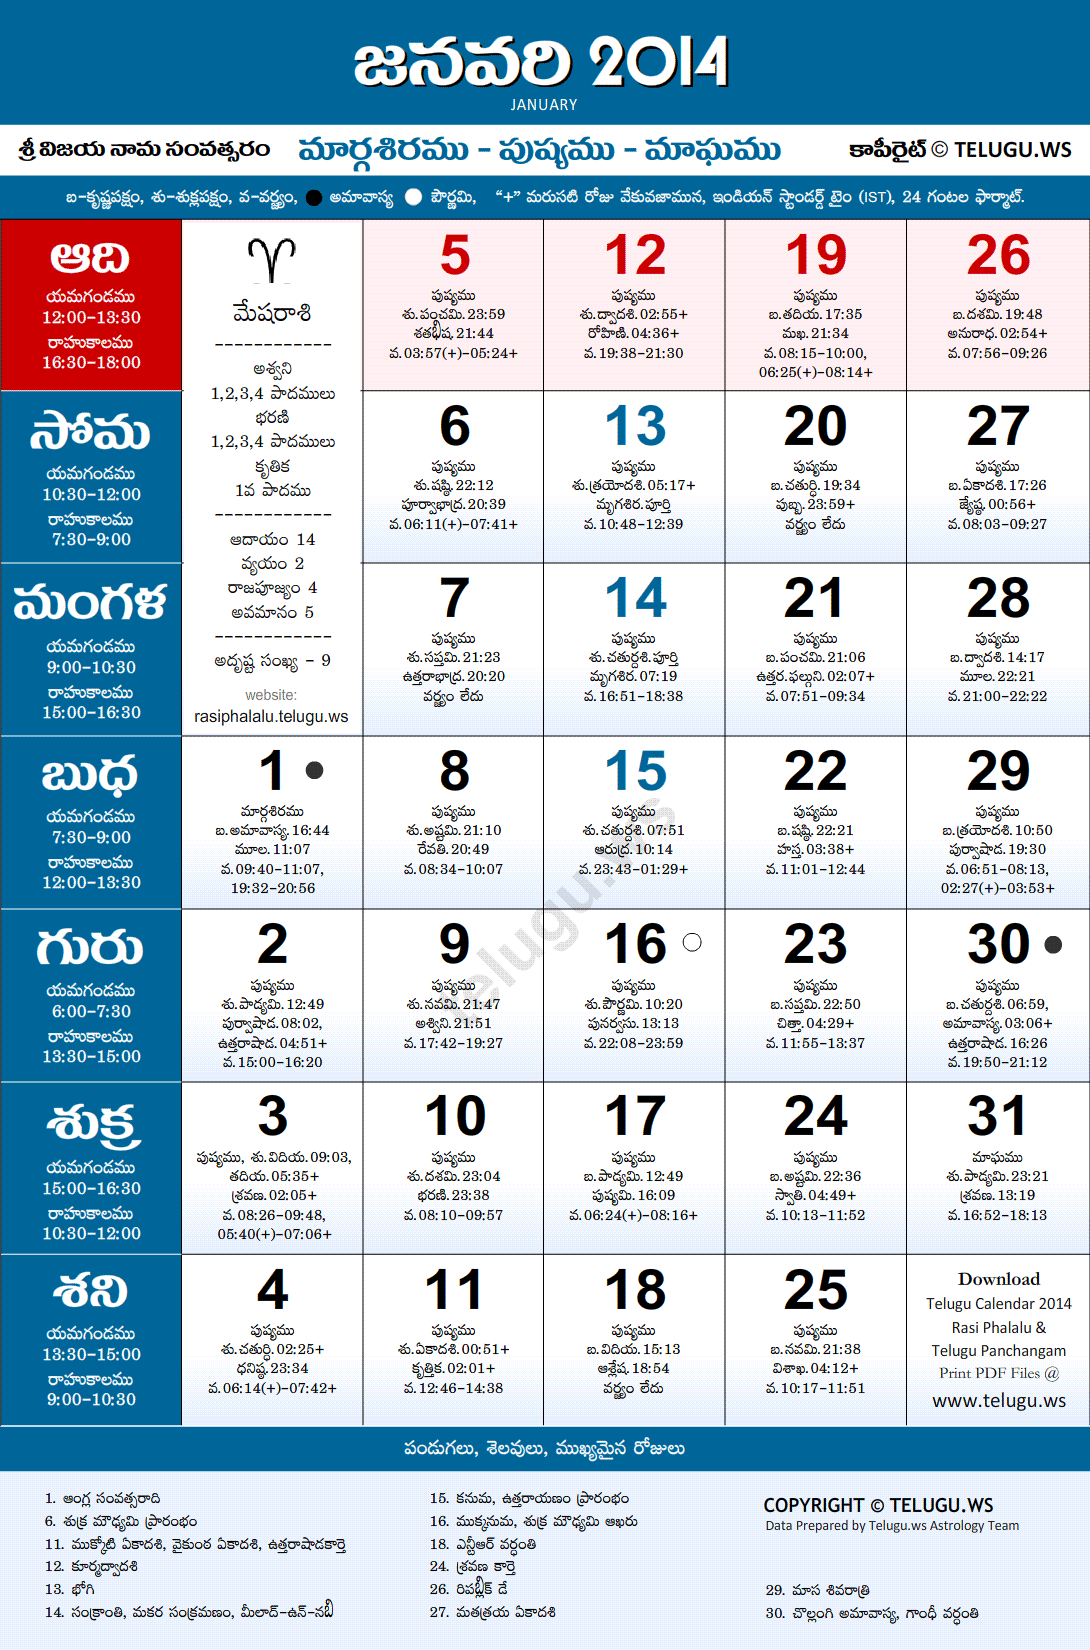 Telugu Calendar 2014 January Festivals and Holidays